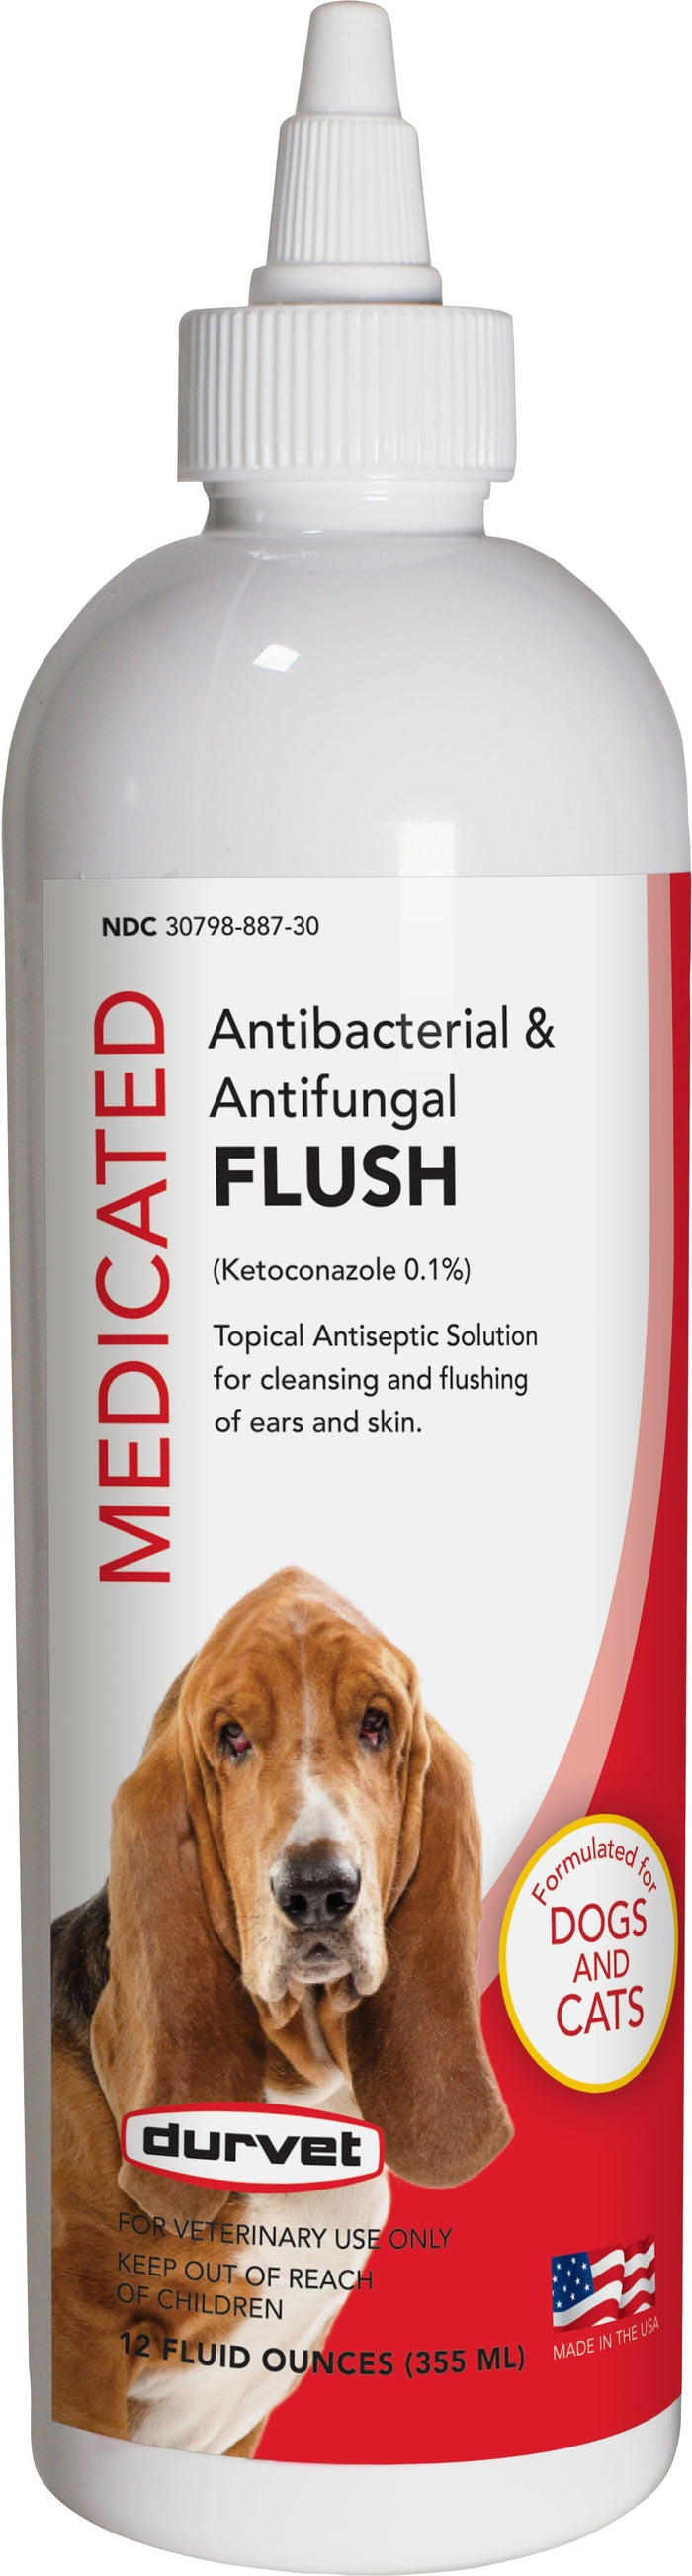 Durvet Antibacterial & Antifungal Flush for Dogs - 12 Oz